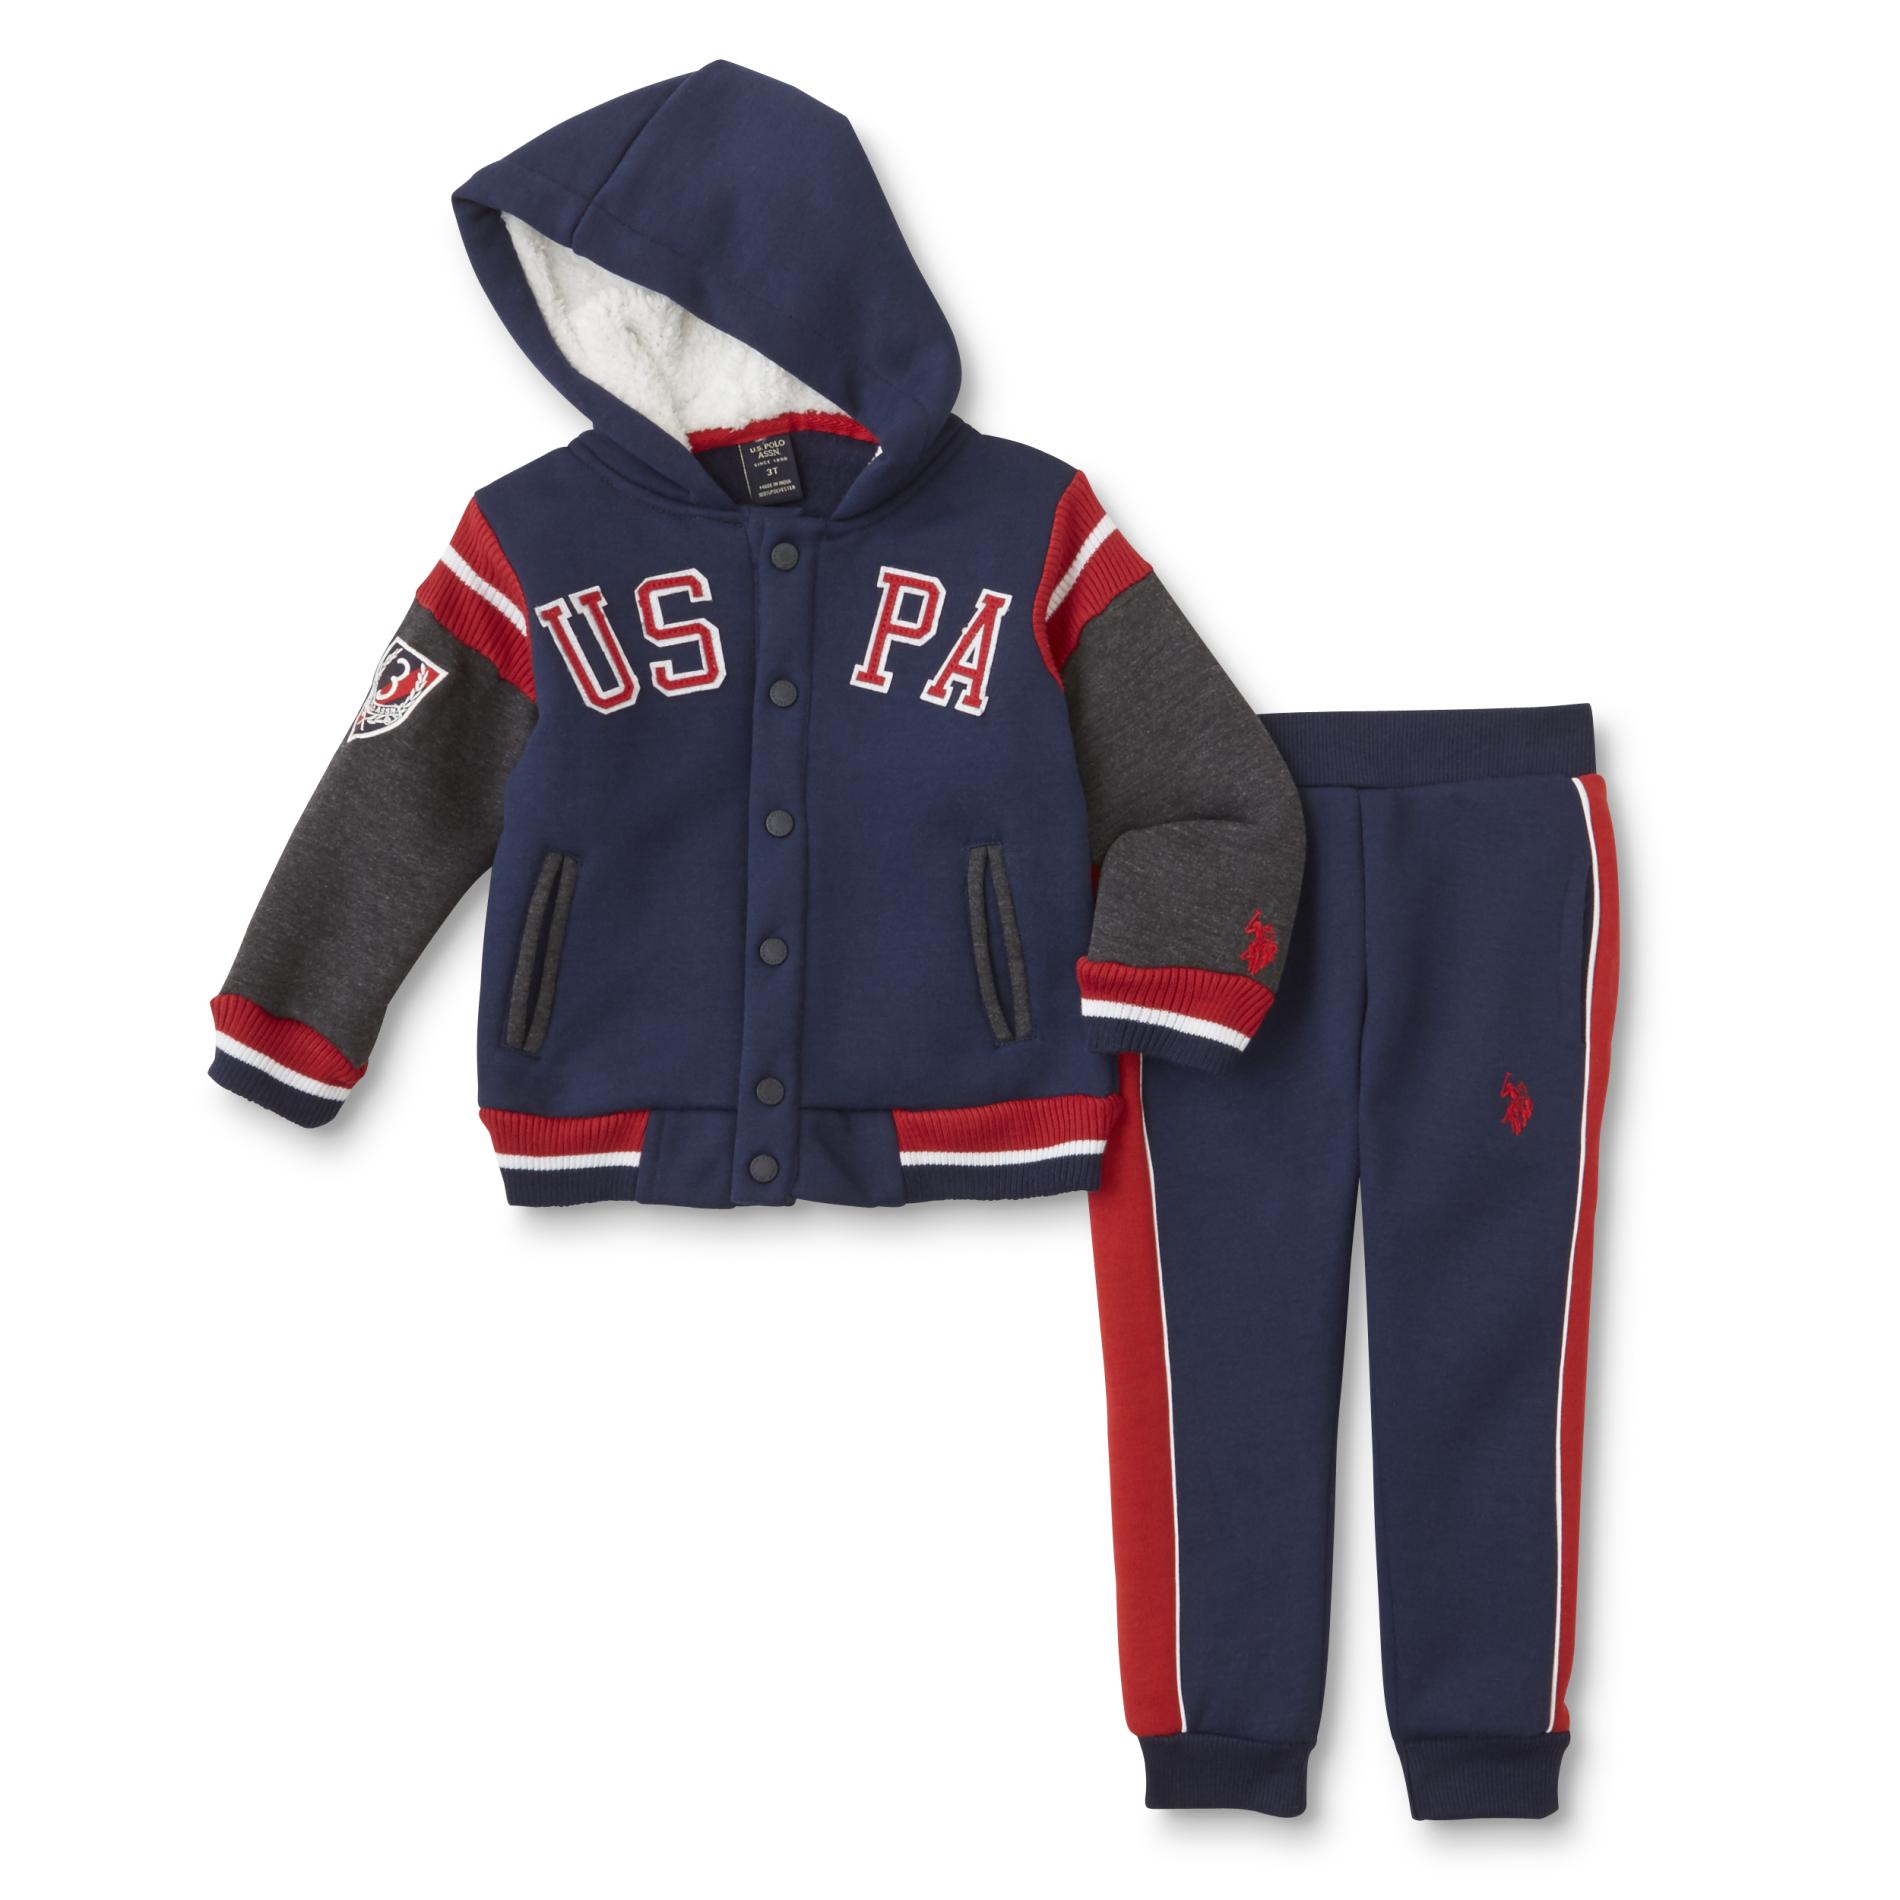 U.S. Polo Assn. Infant & Toddler Boys' Hoodie Jacket & Sweatpants - Striped